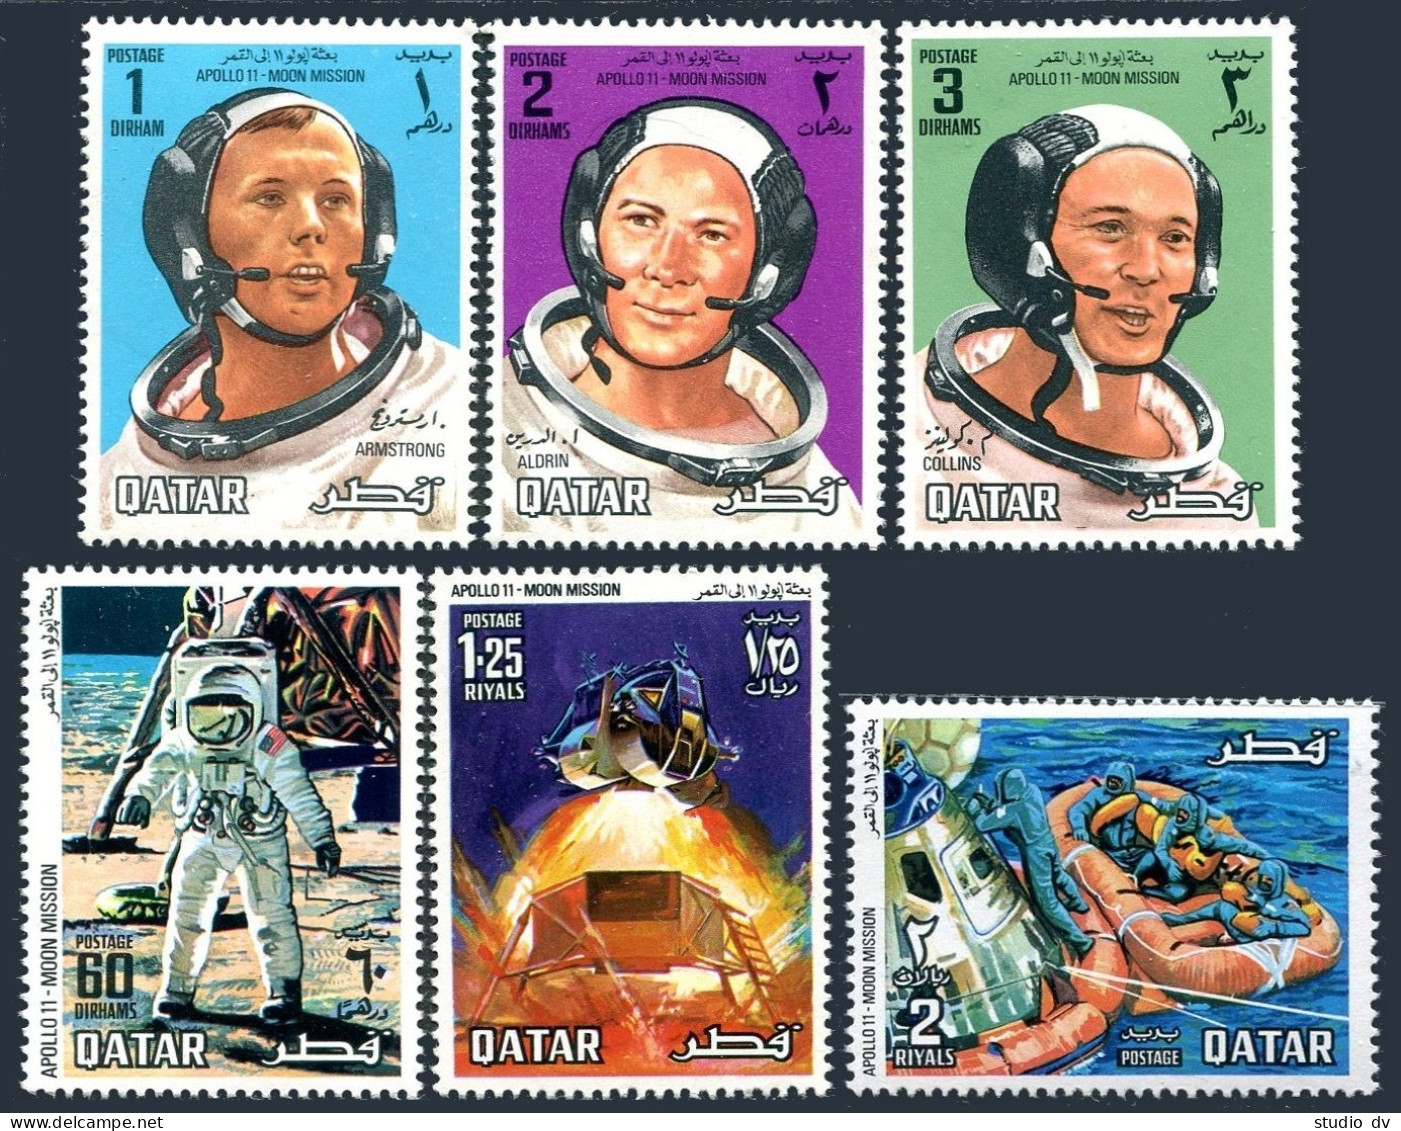 Qatar 190-195, Hinged. Michel 397-402. Apollo 11 Moon Landing, 1969. - Qatar